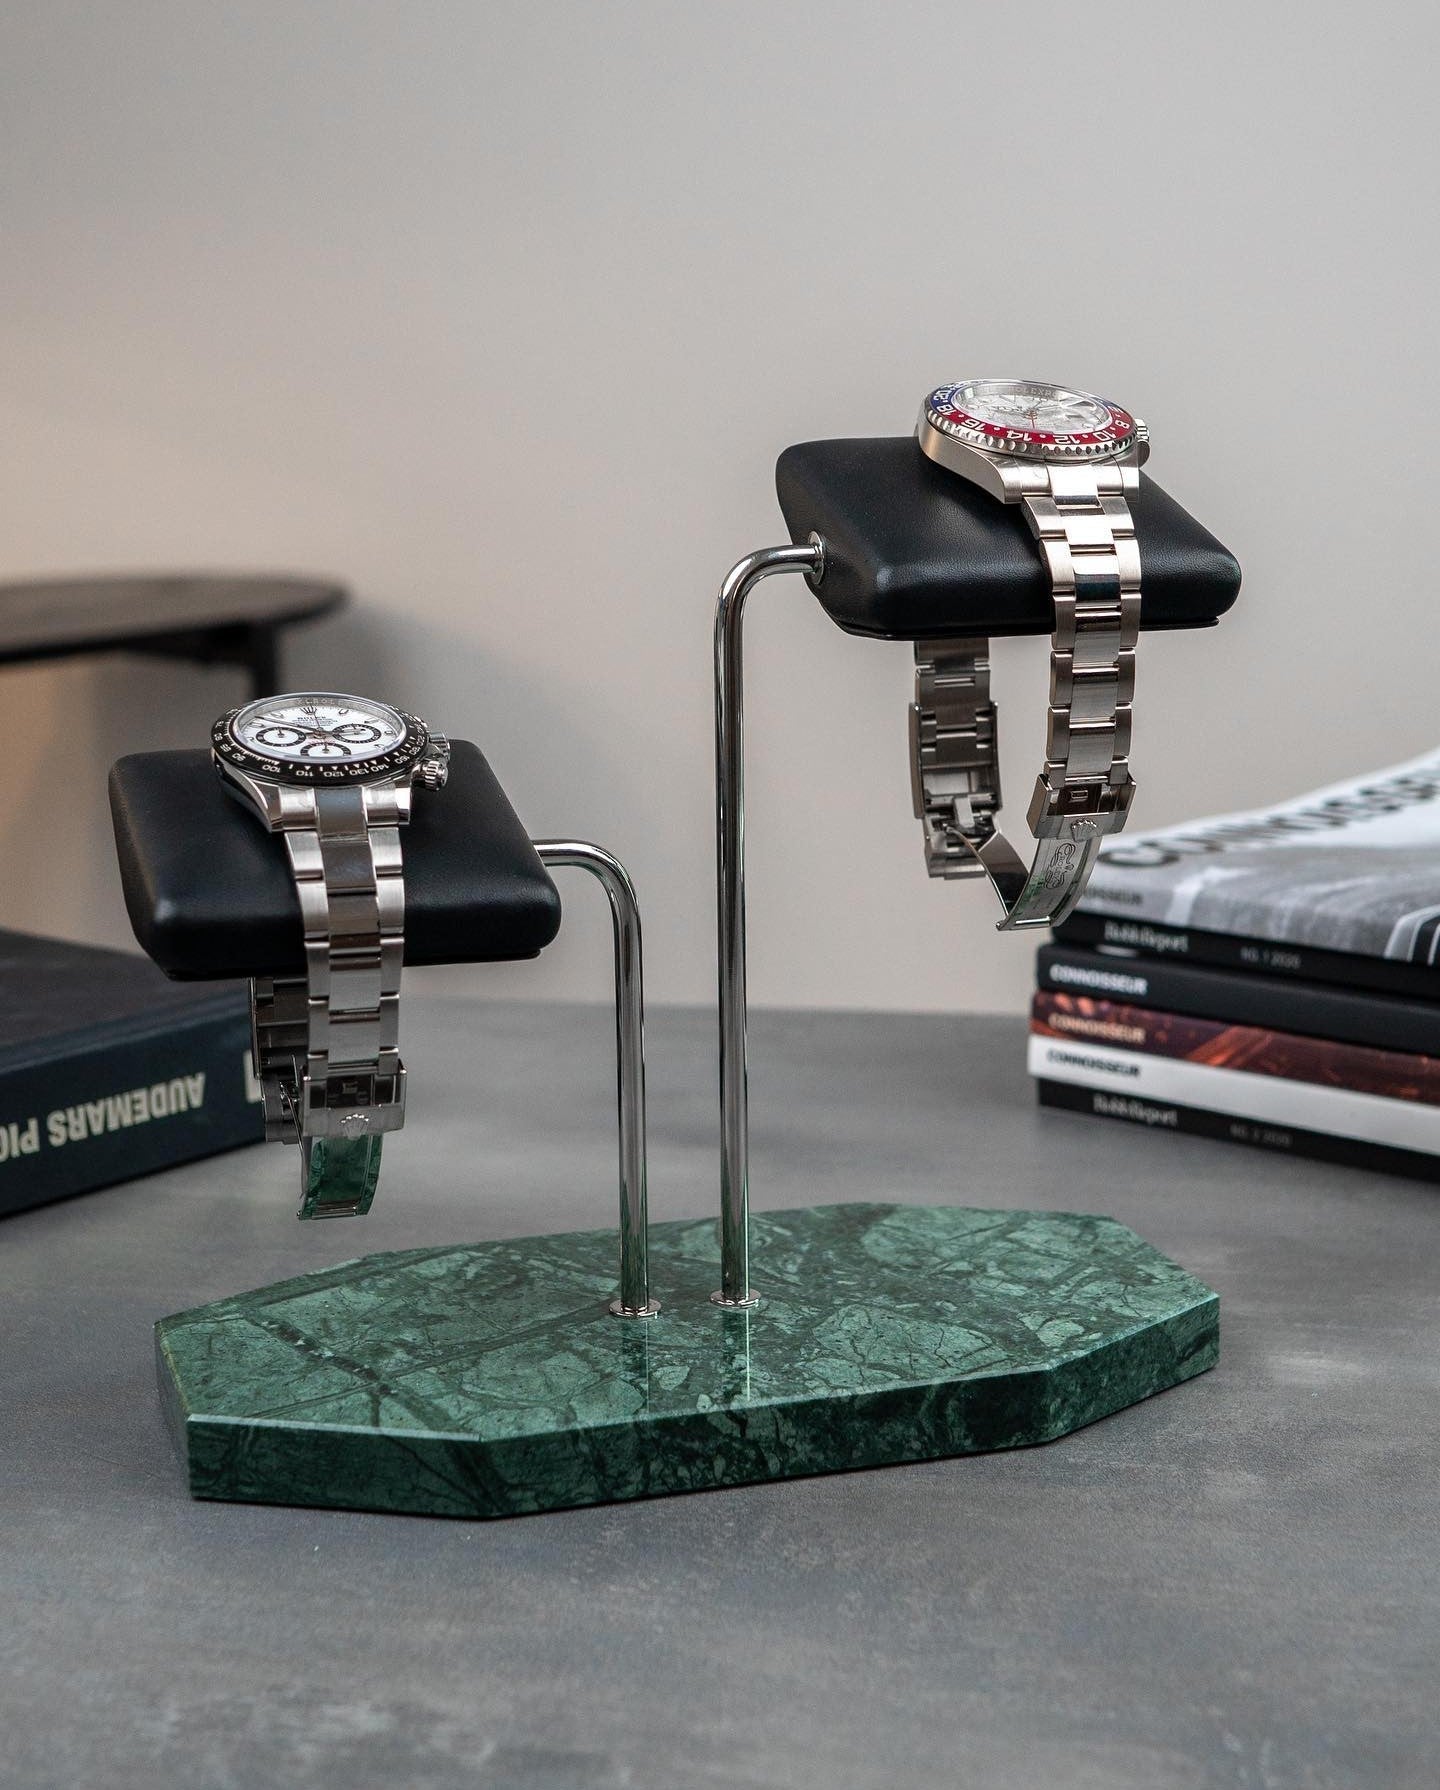 Hexagonal Luxury Watch Stand - Double Cushion - Green